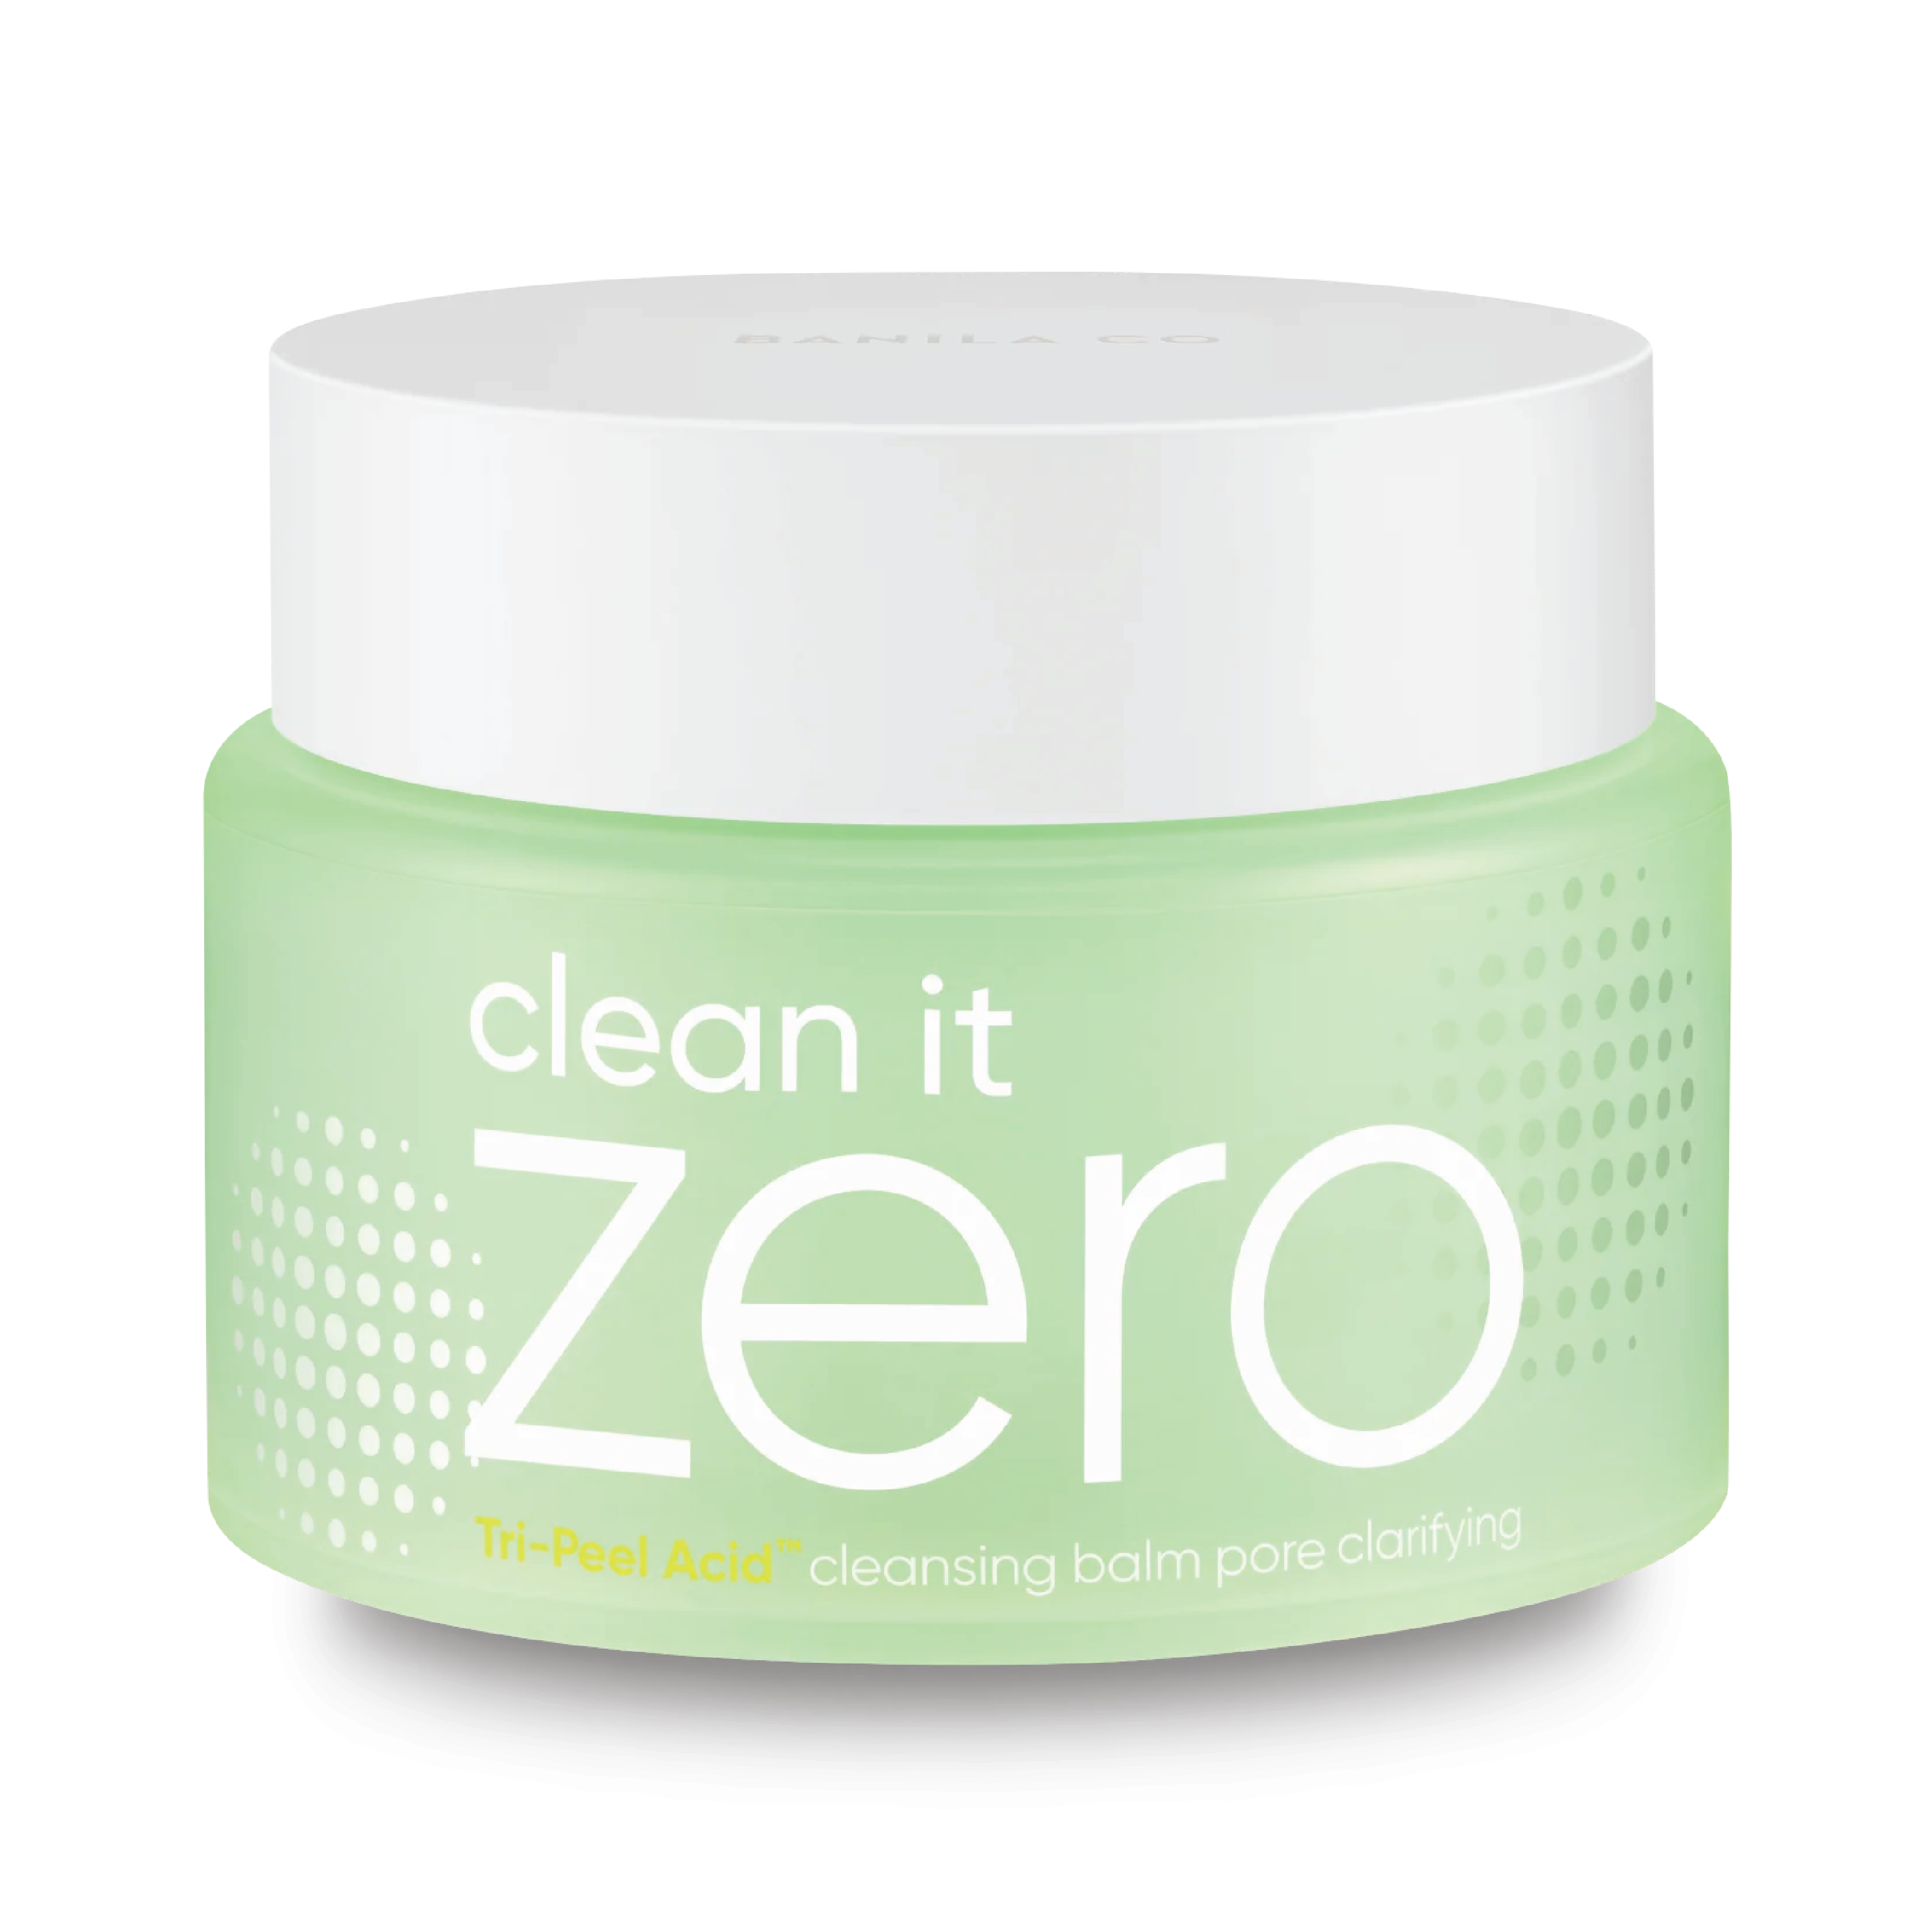 Banila Co Clean It Zero Cleansing Balm Pore Clarifying, 100 ml